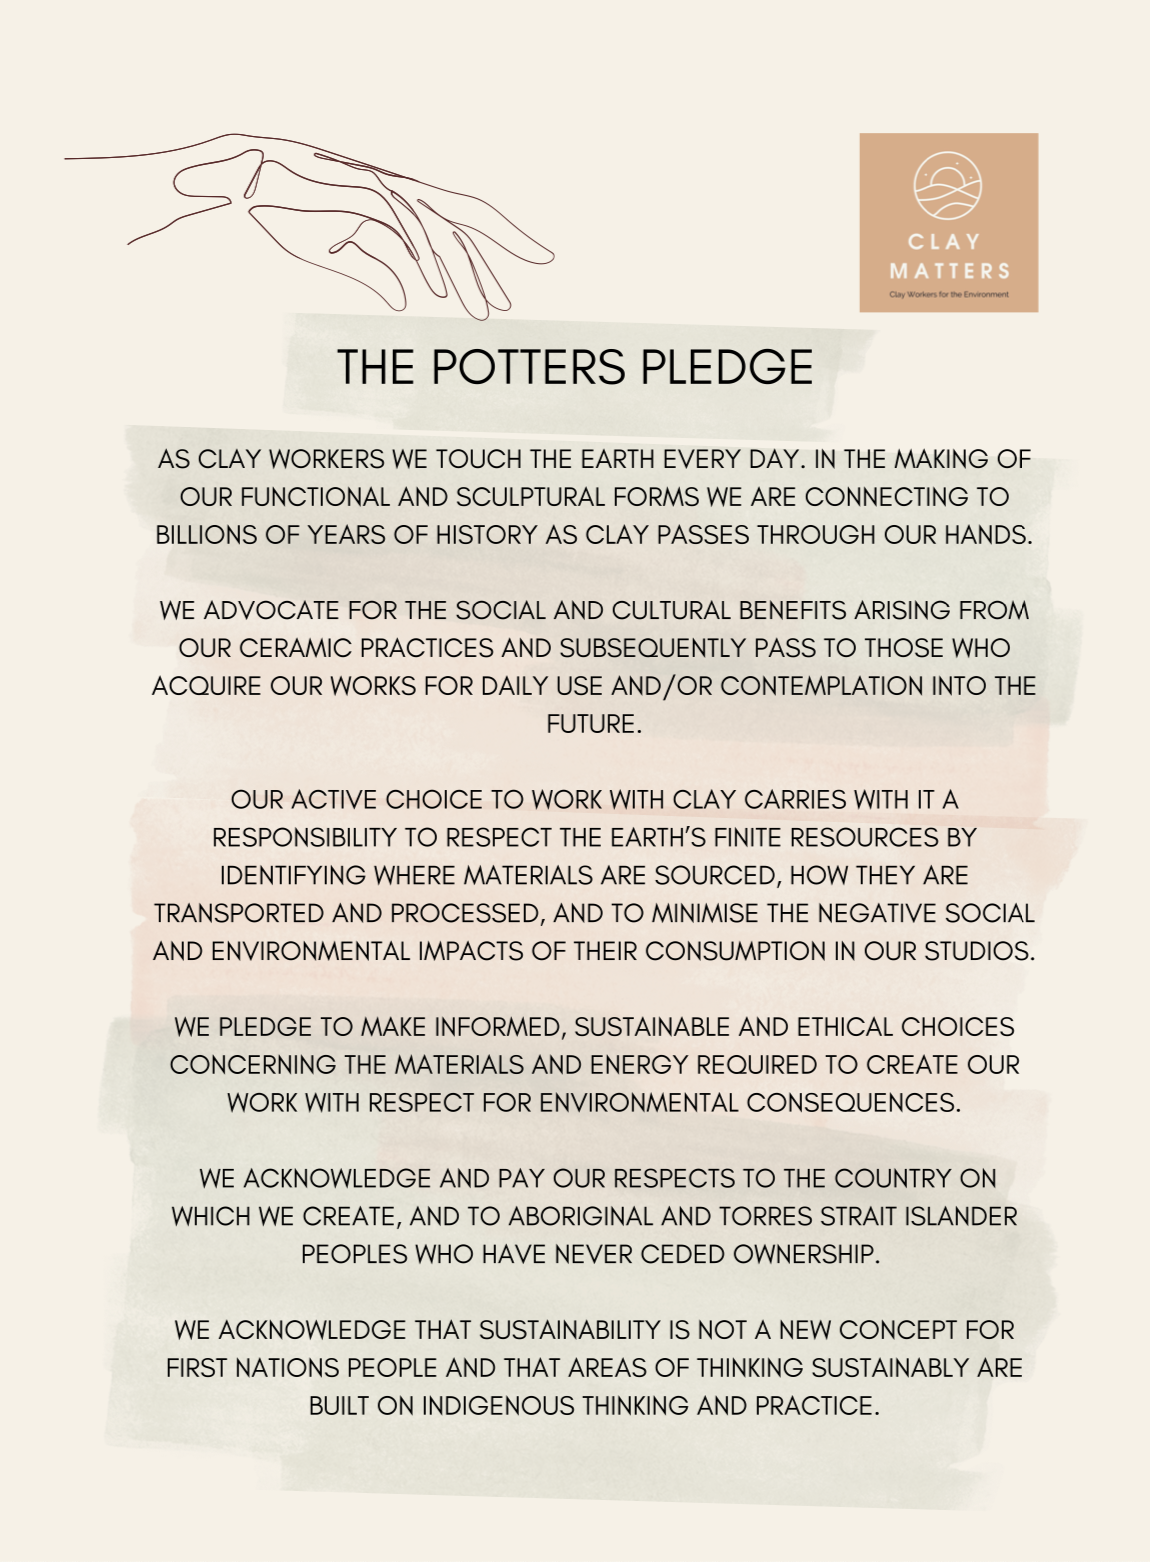 The Potter’s Pledge